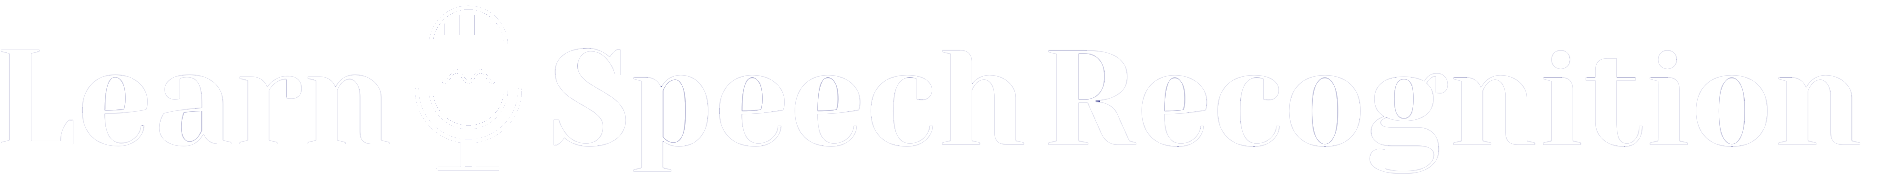 LearnSpeechRecognition logo